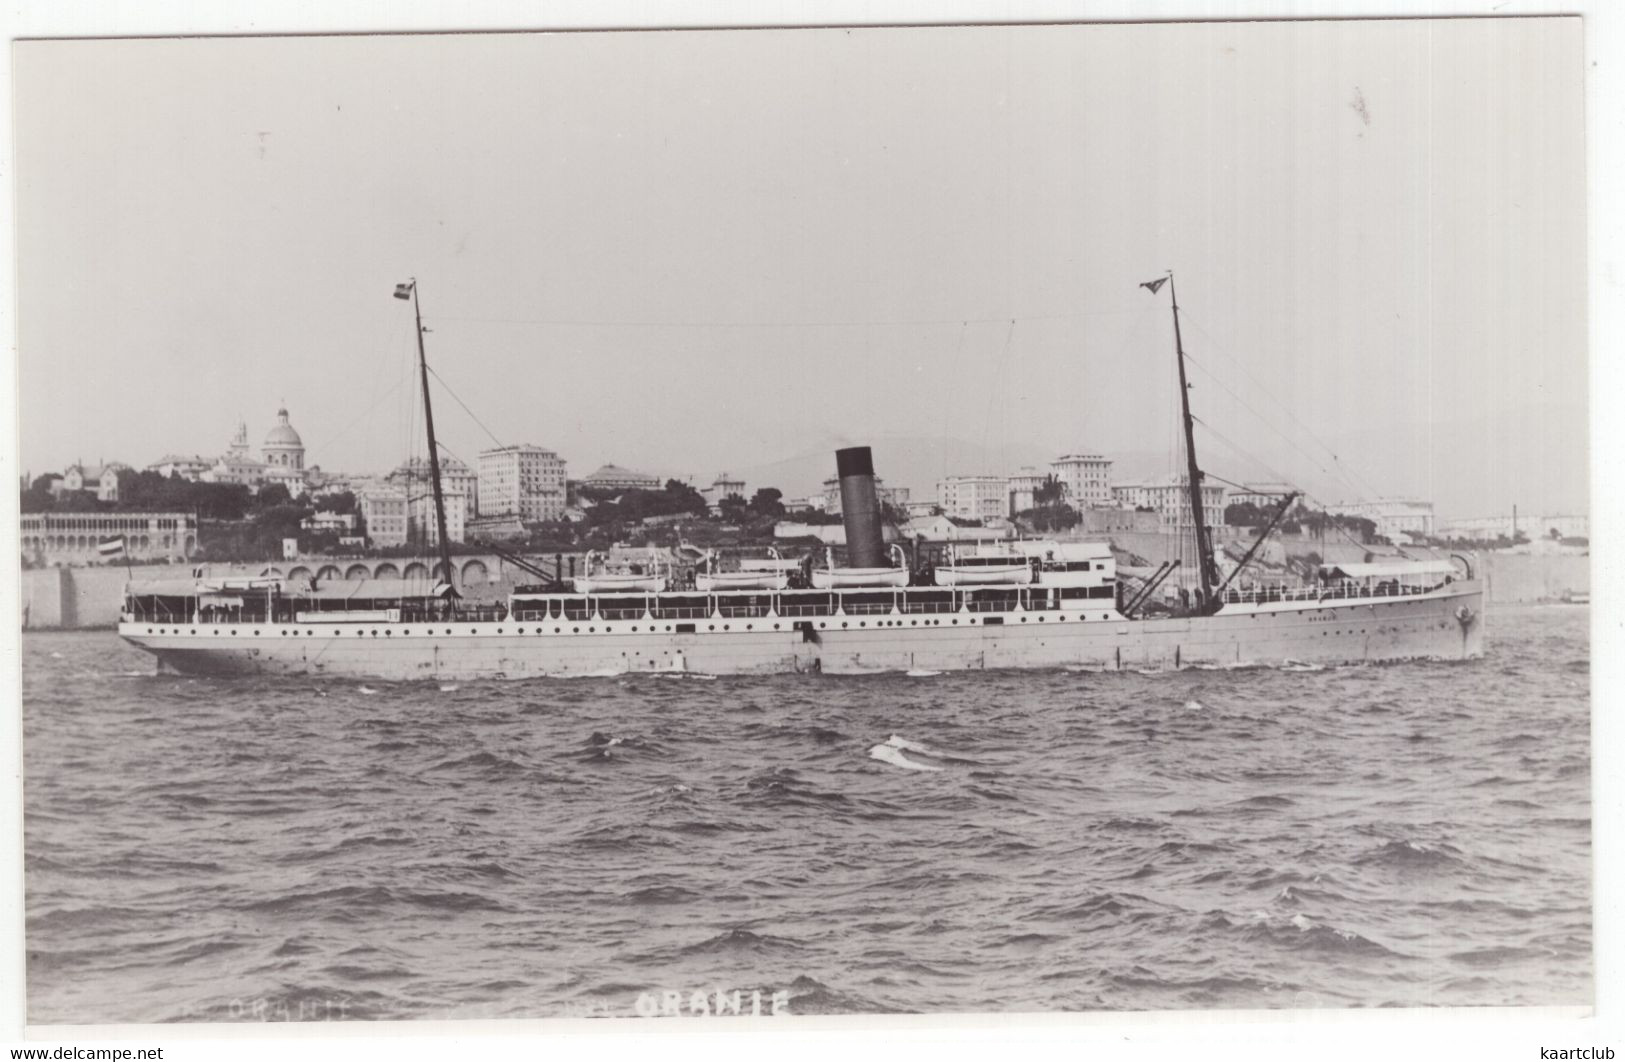 MS 'ORANJE' - NSM - Passenger Ship, Steamer - Boats